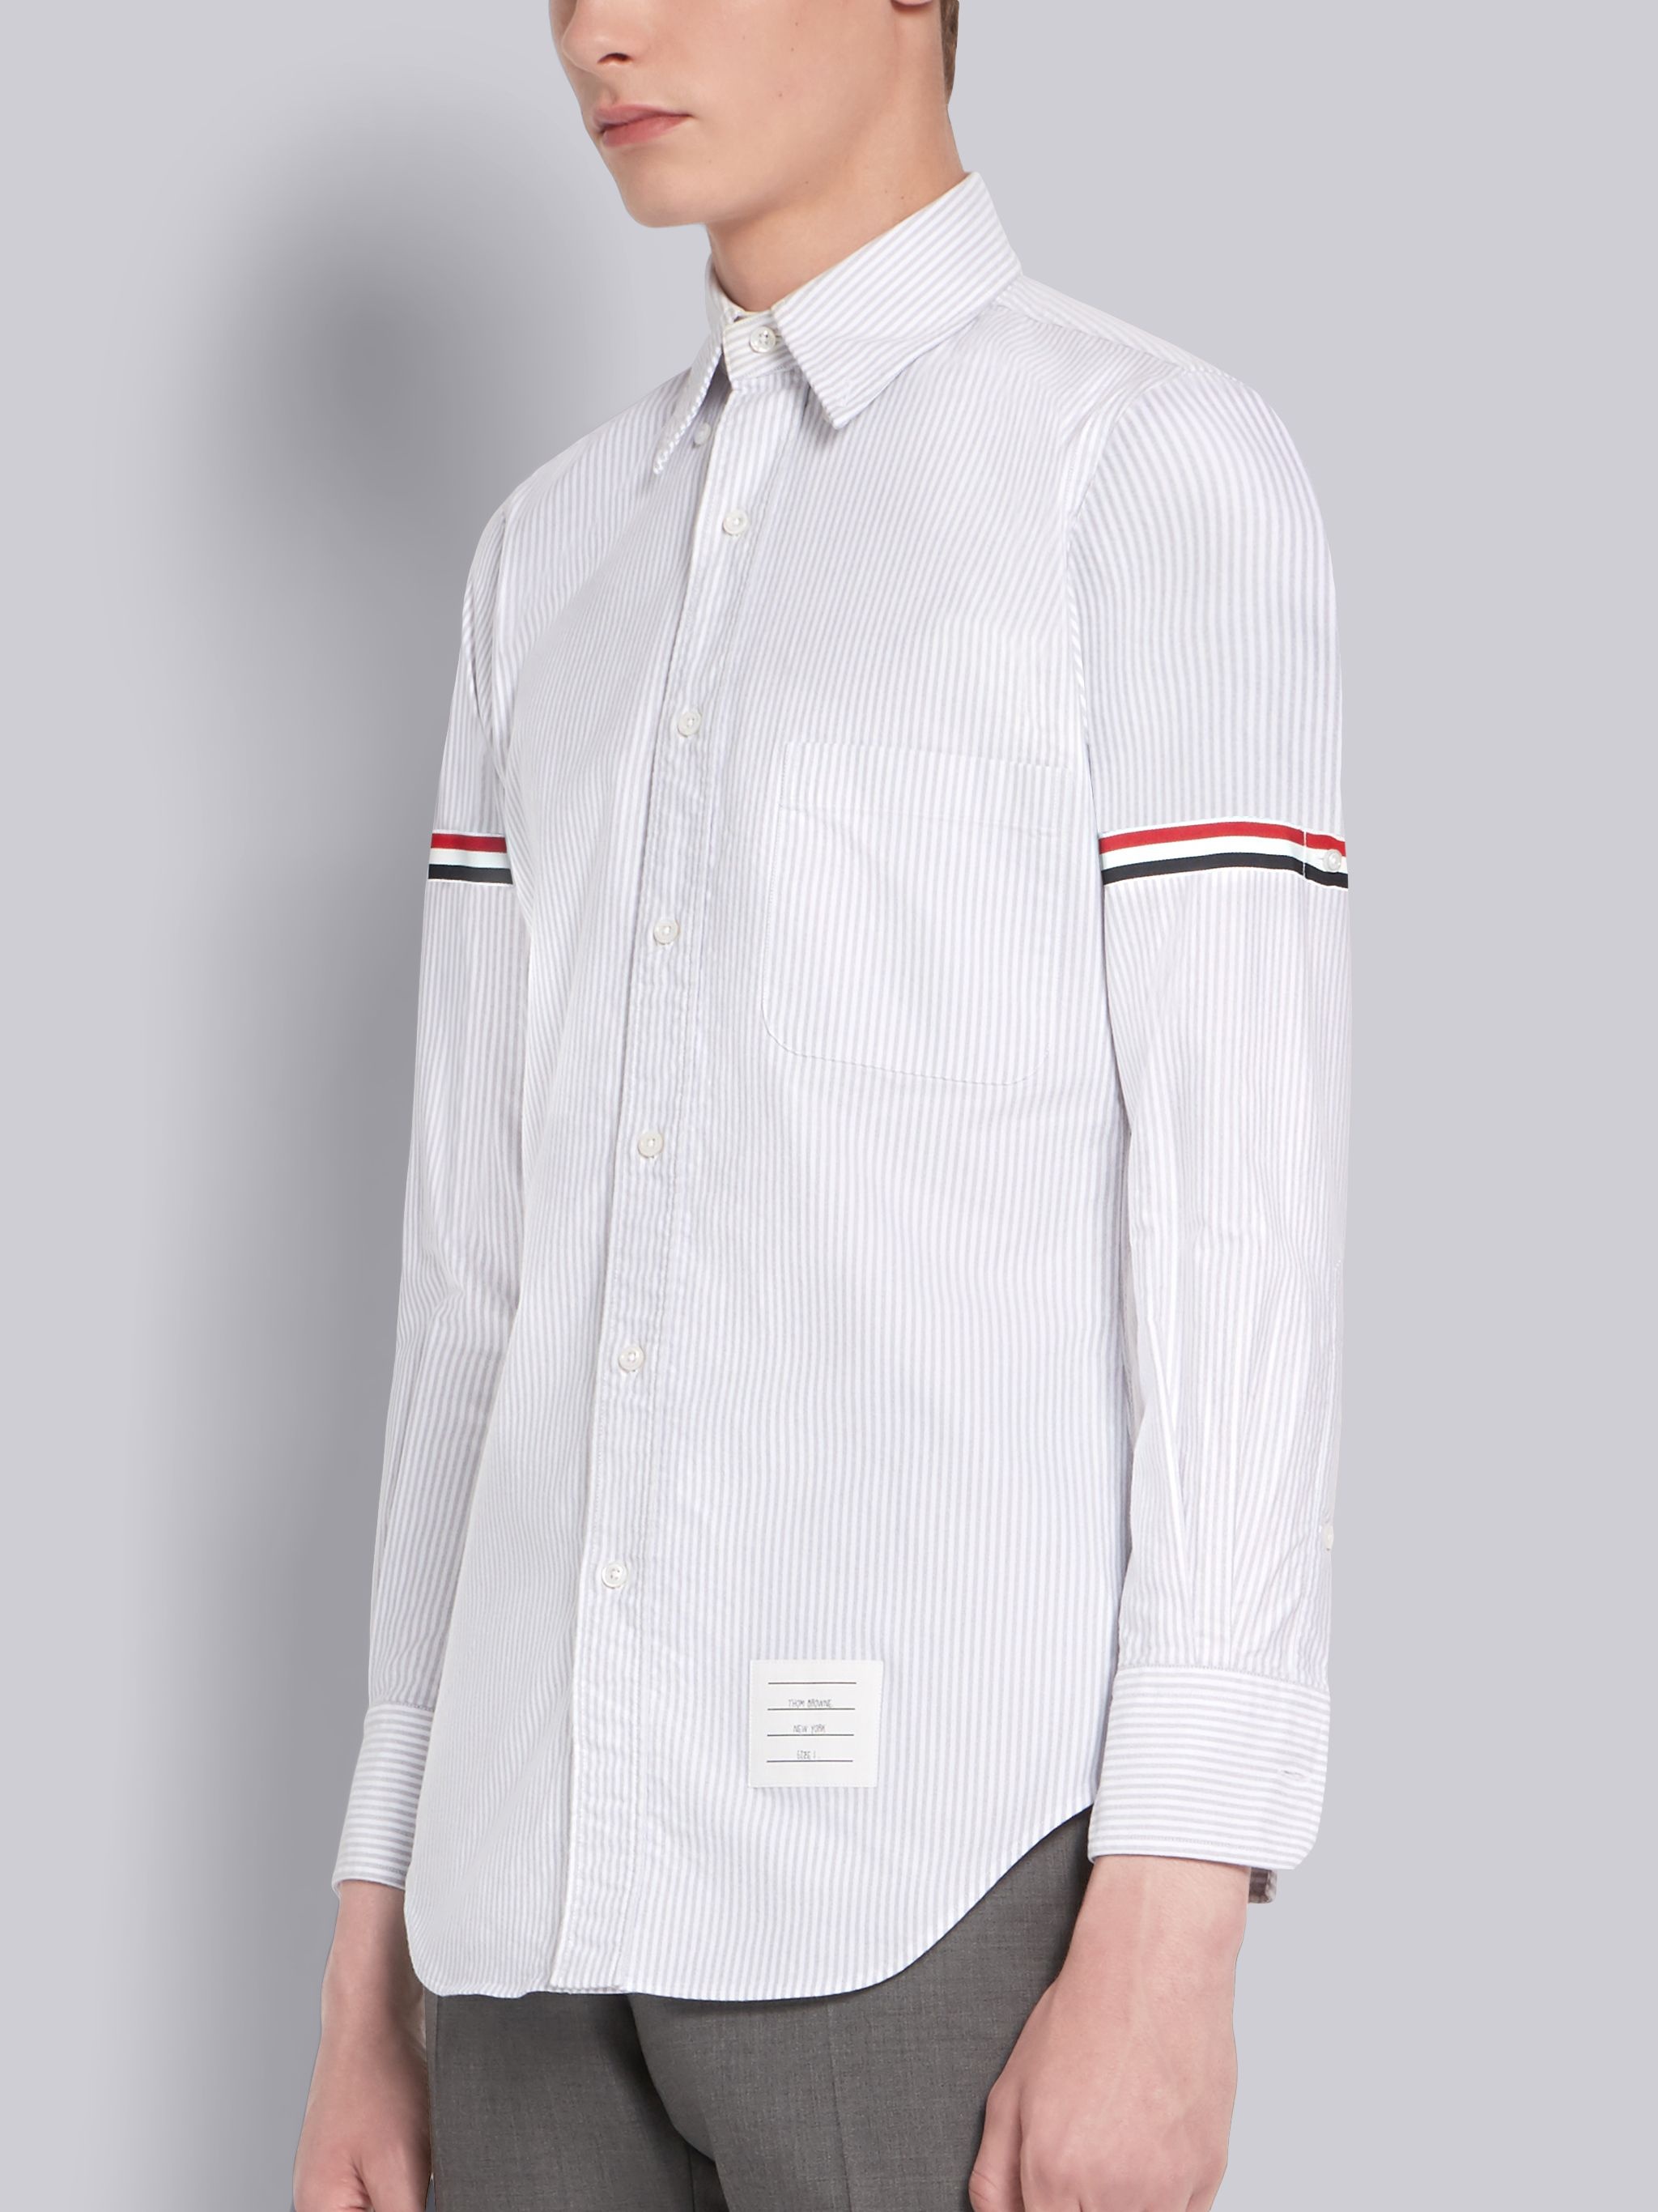 Medium Grey Oxford Cotton University Stripe Grosgrain Armband Shirt - 2